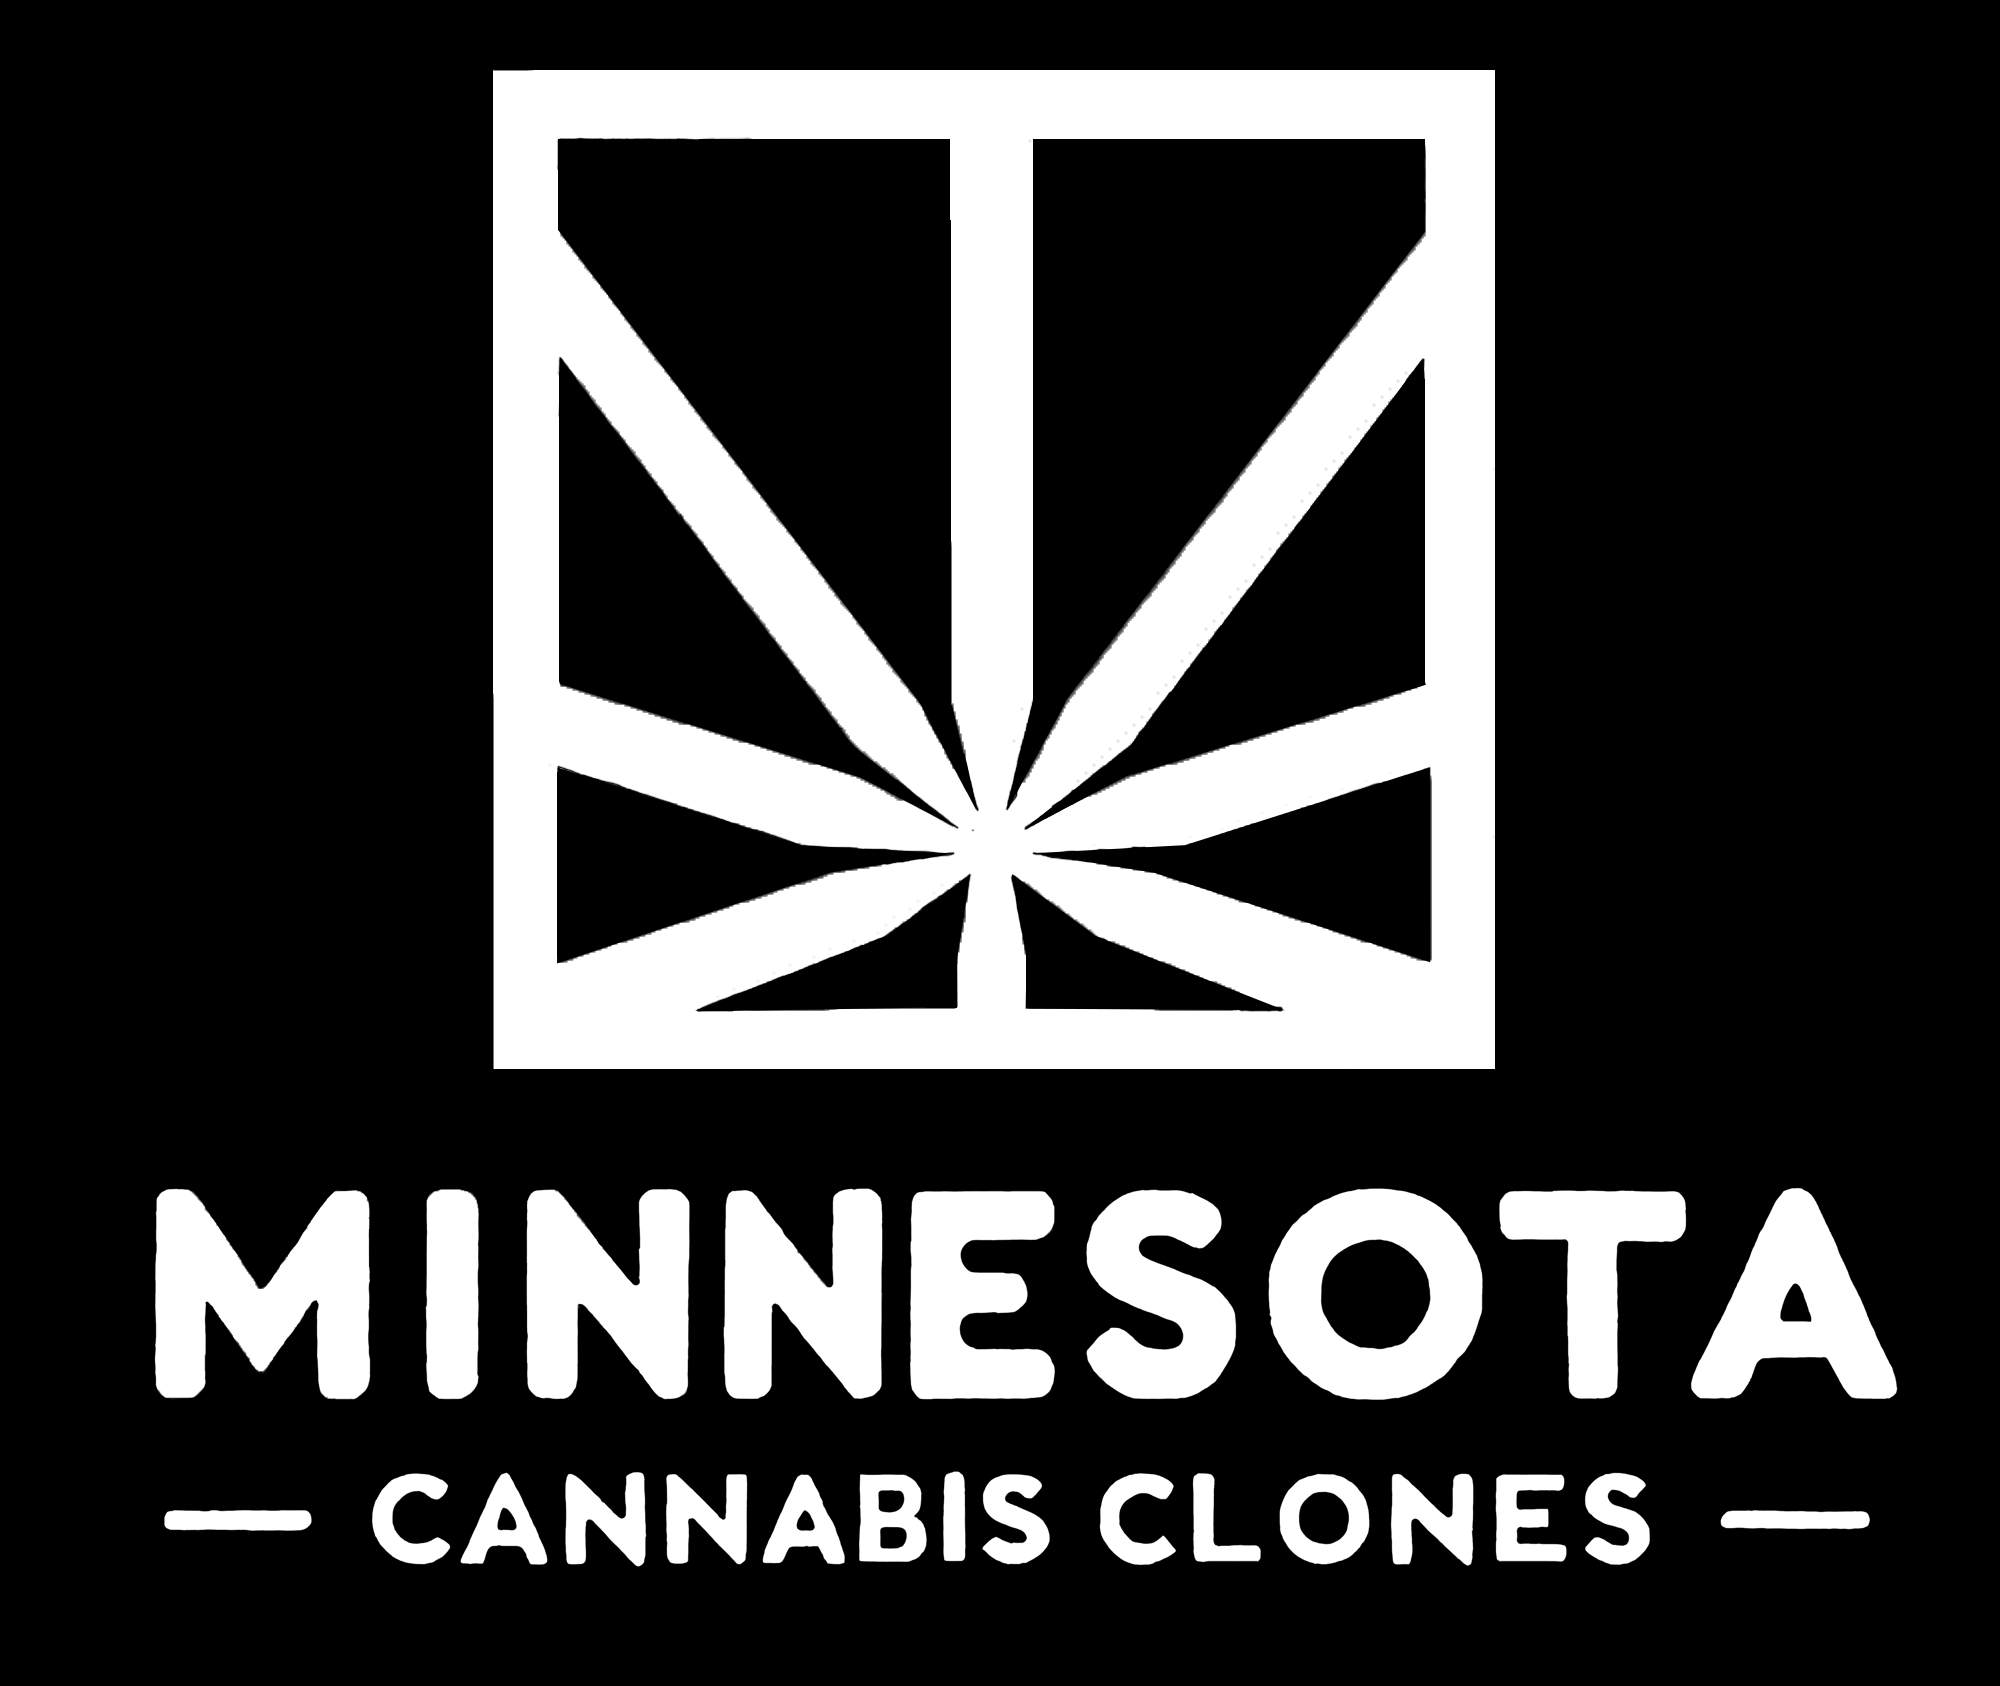 Minnesota Cannabis Clones Logo and Text